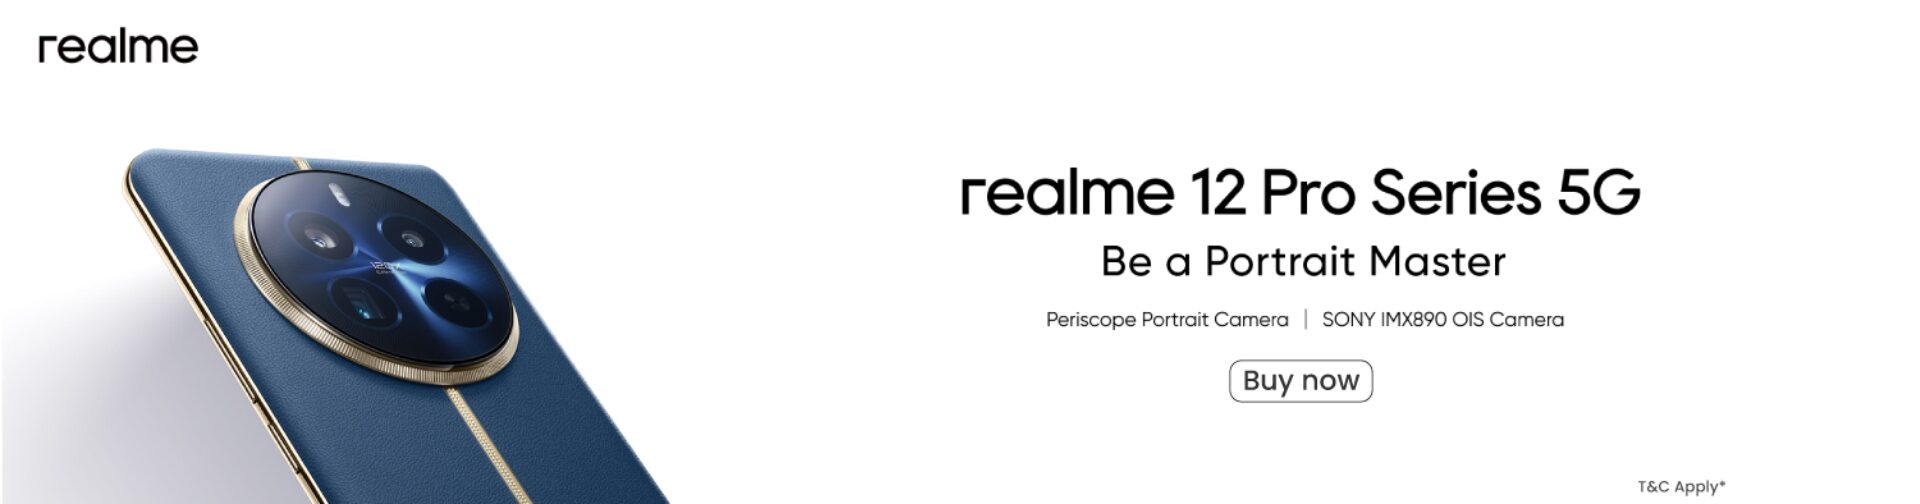 Realme-12-Pro-Series-wb